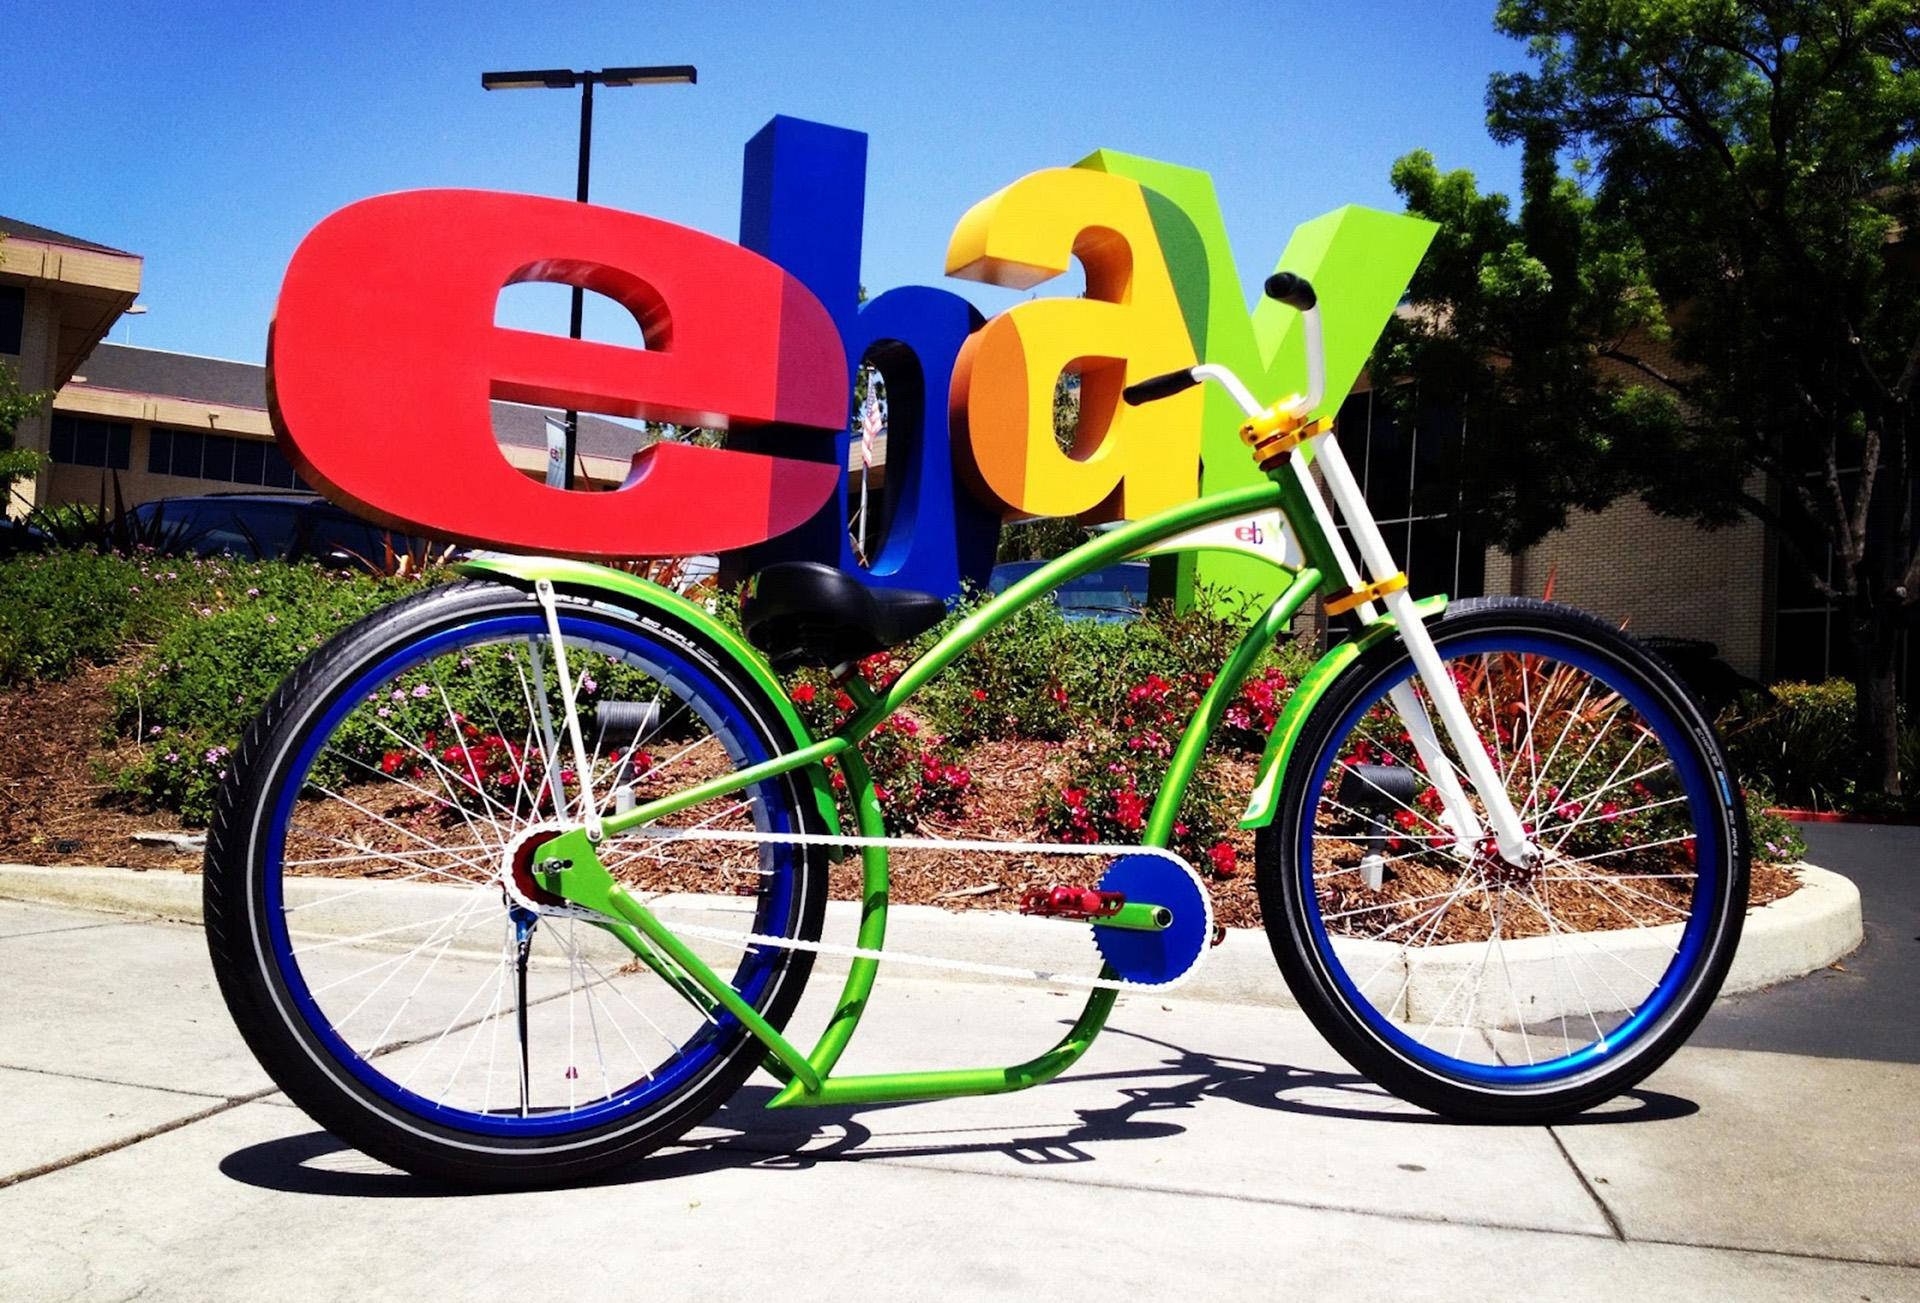 Ebay Logo And Bicycle